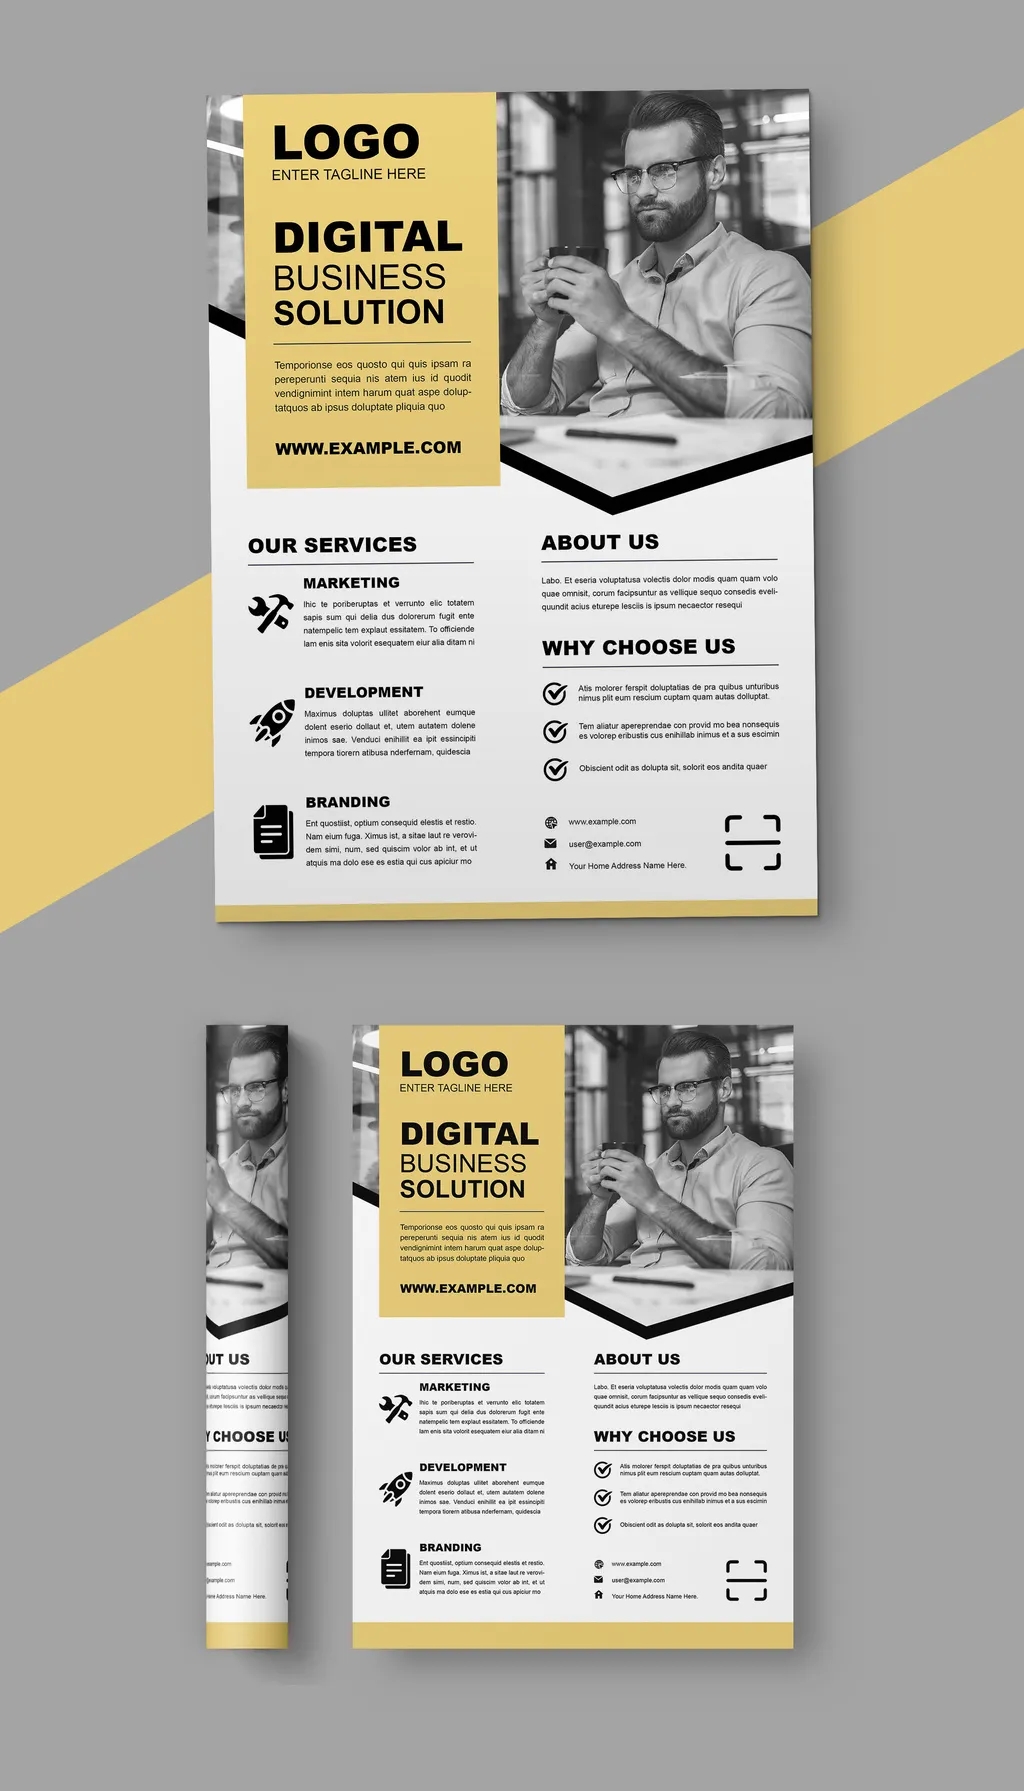 Adobestock - Business Flyer Design Template 721820130